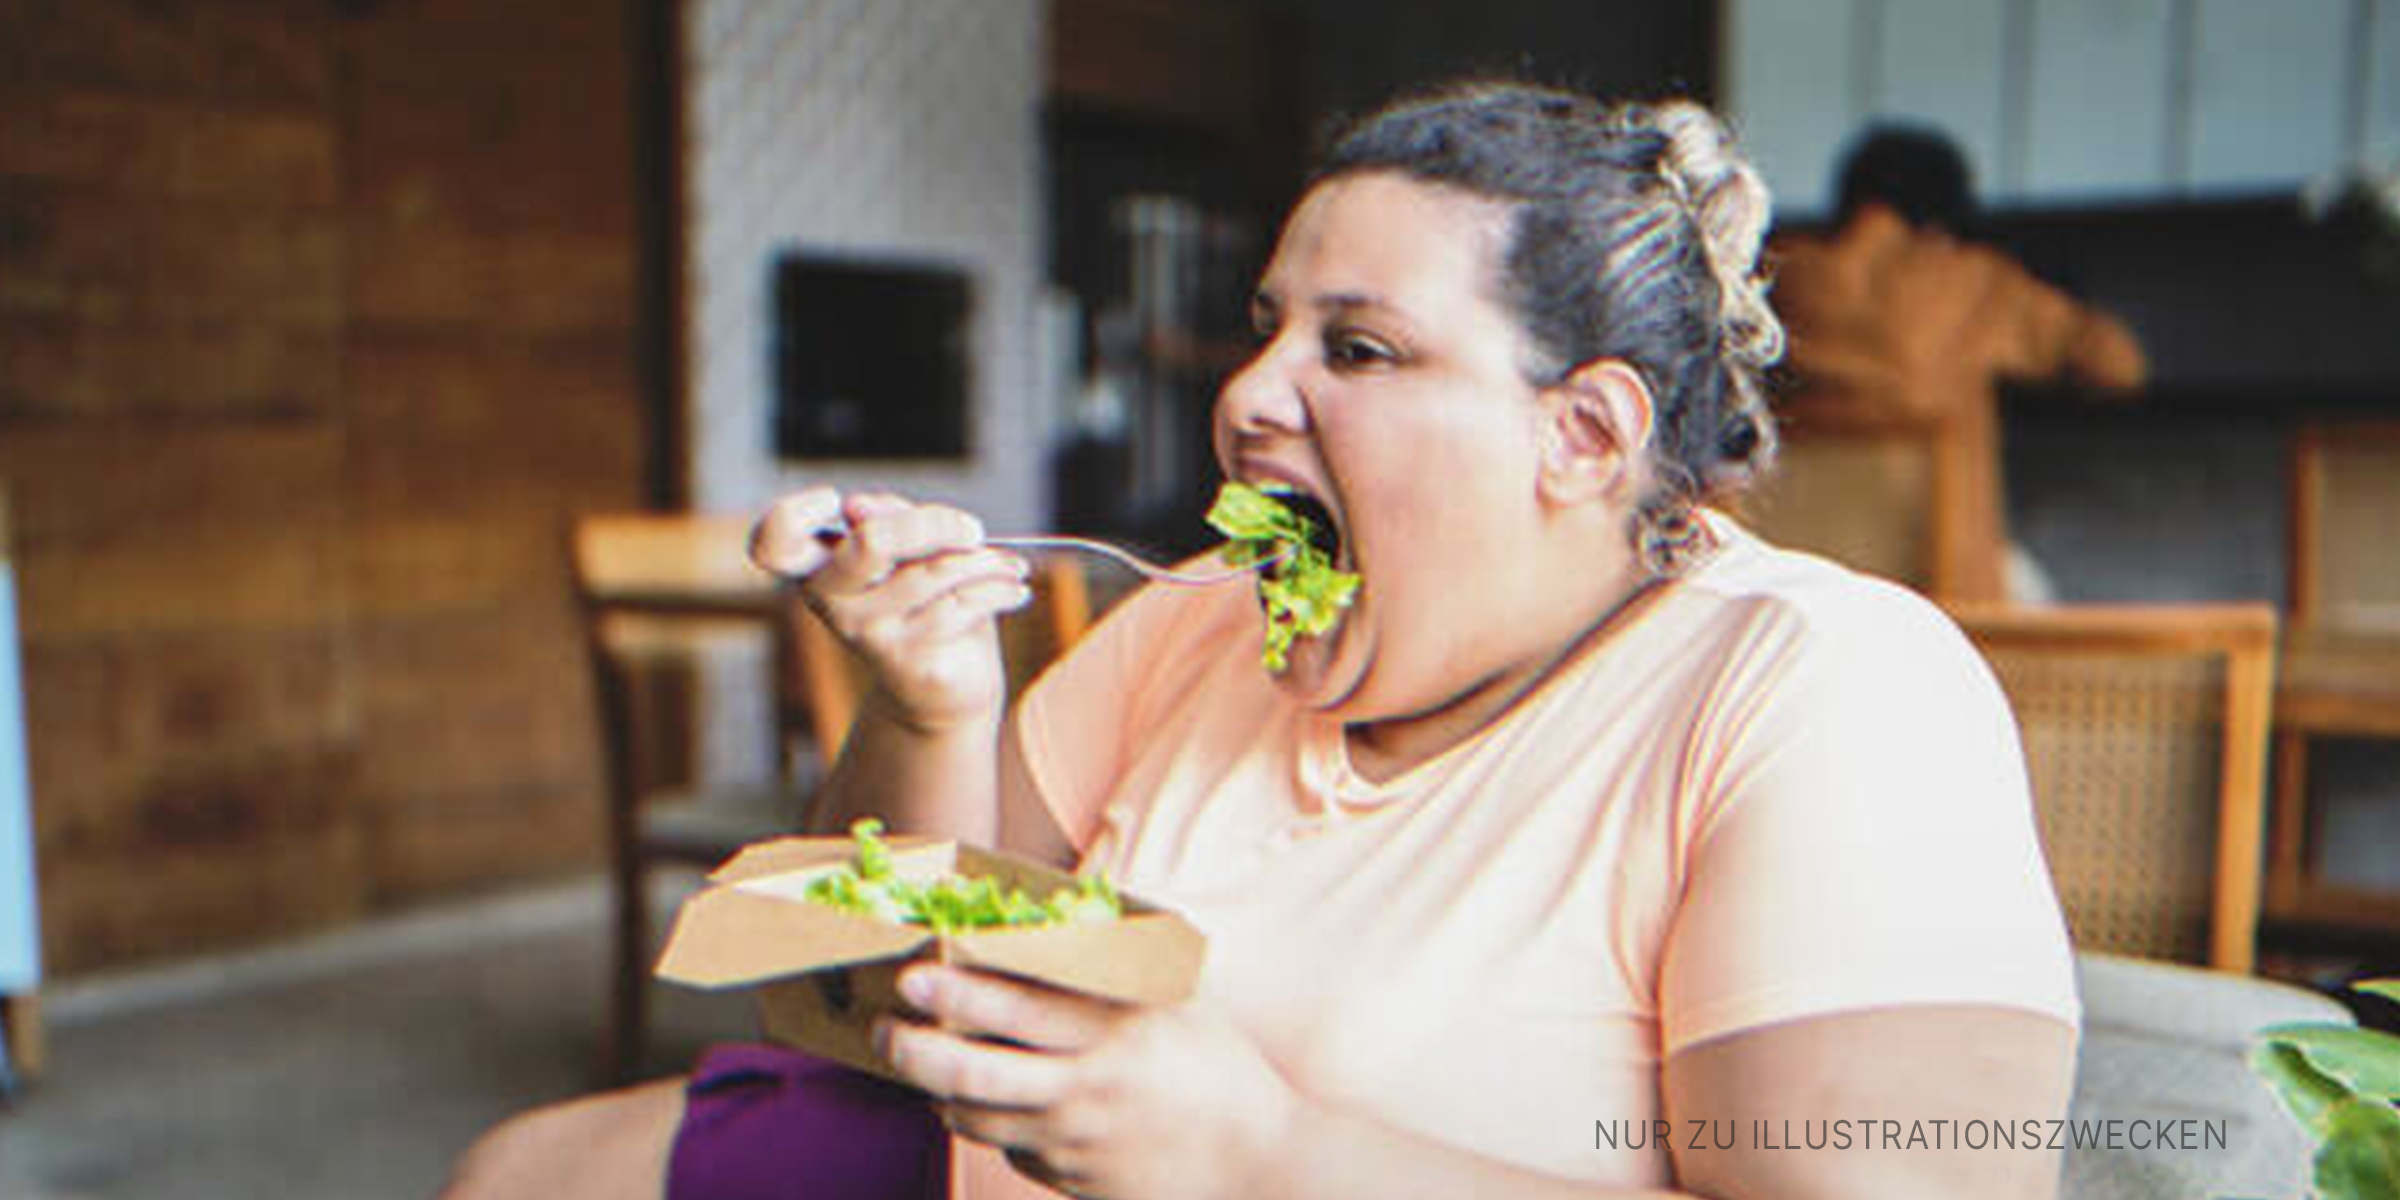 Mollige Frau isst Salat. | Quelle: Getty Images